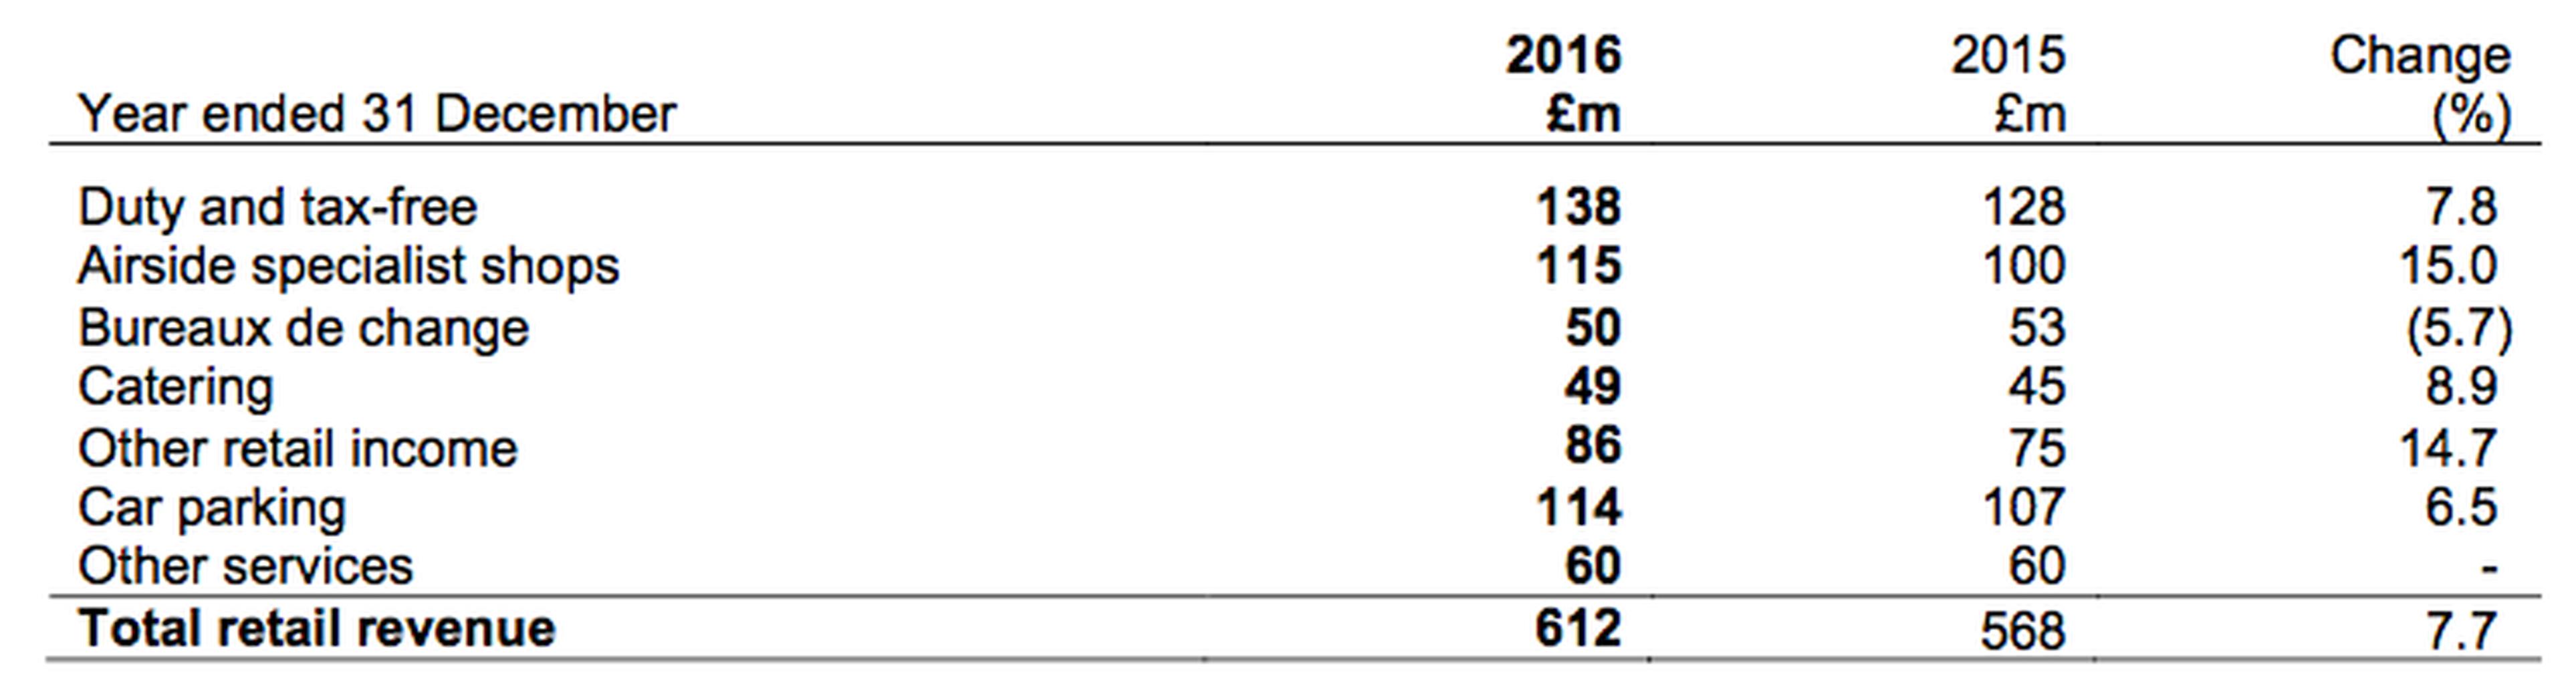 Heathrow Airport: Retail revenues 2016